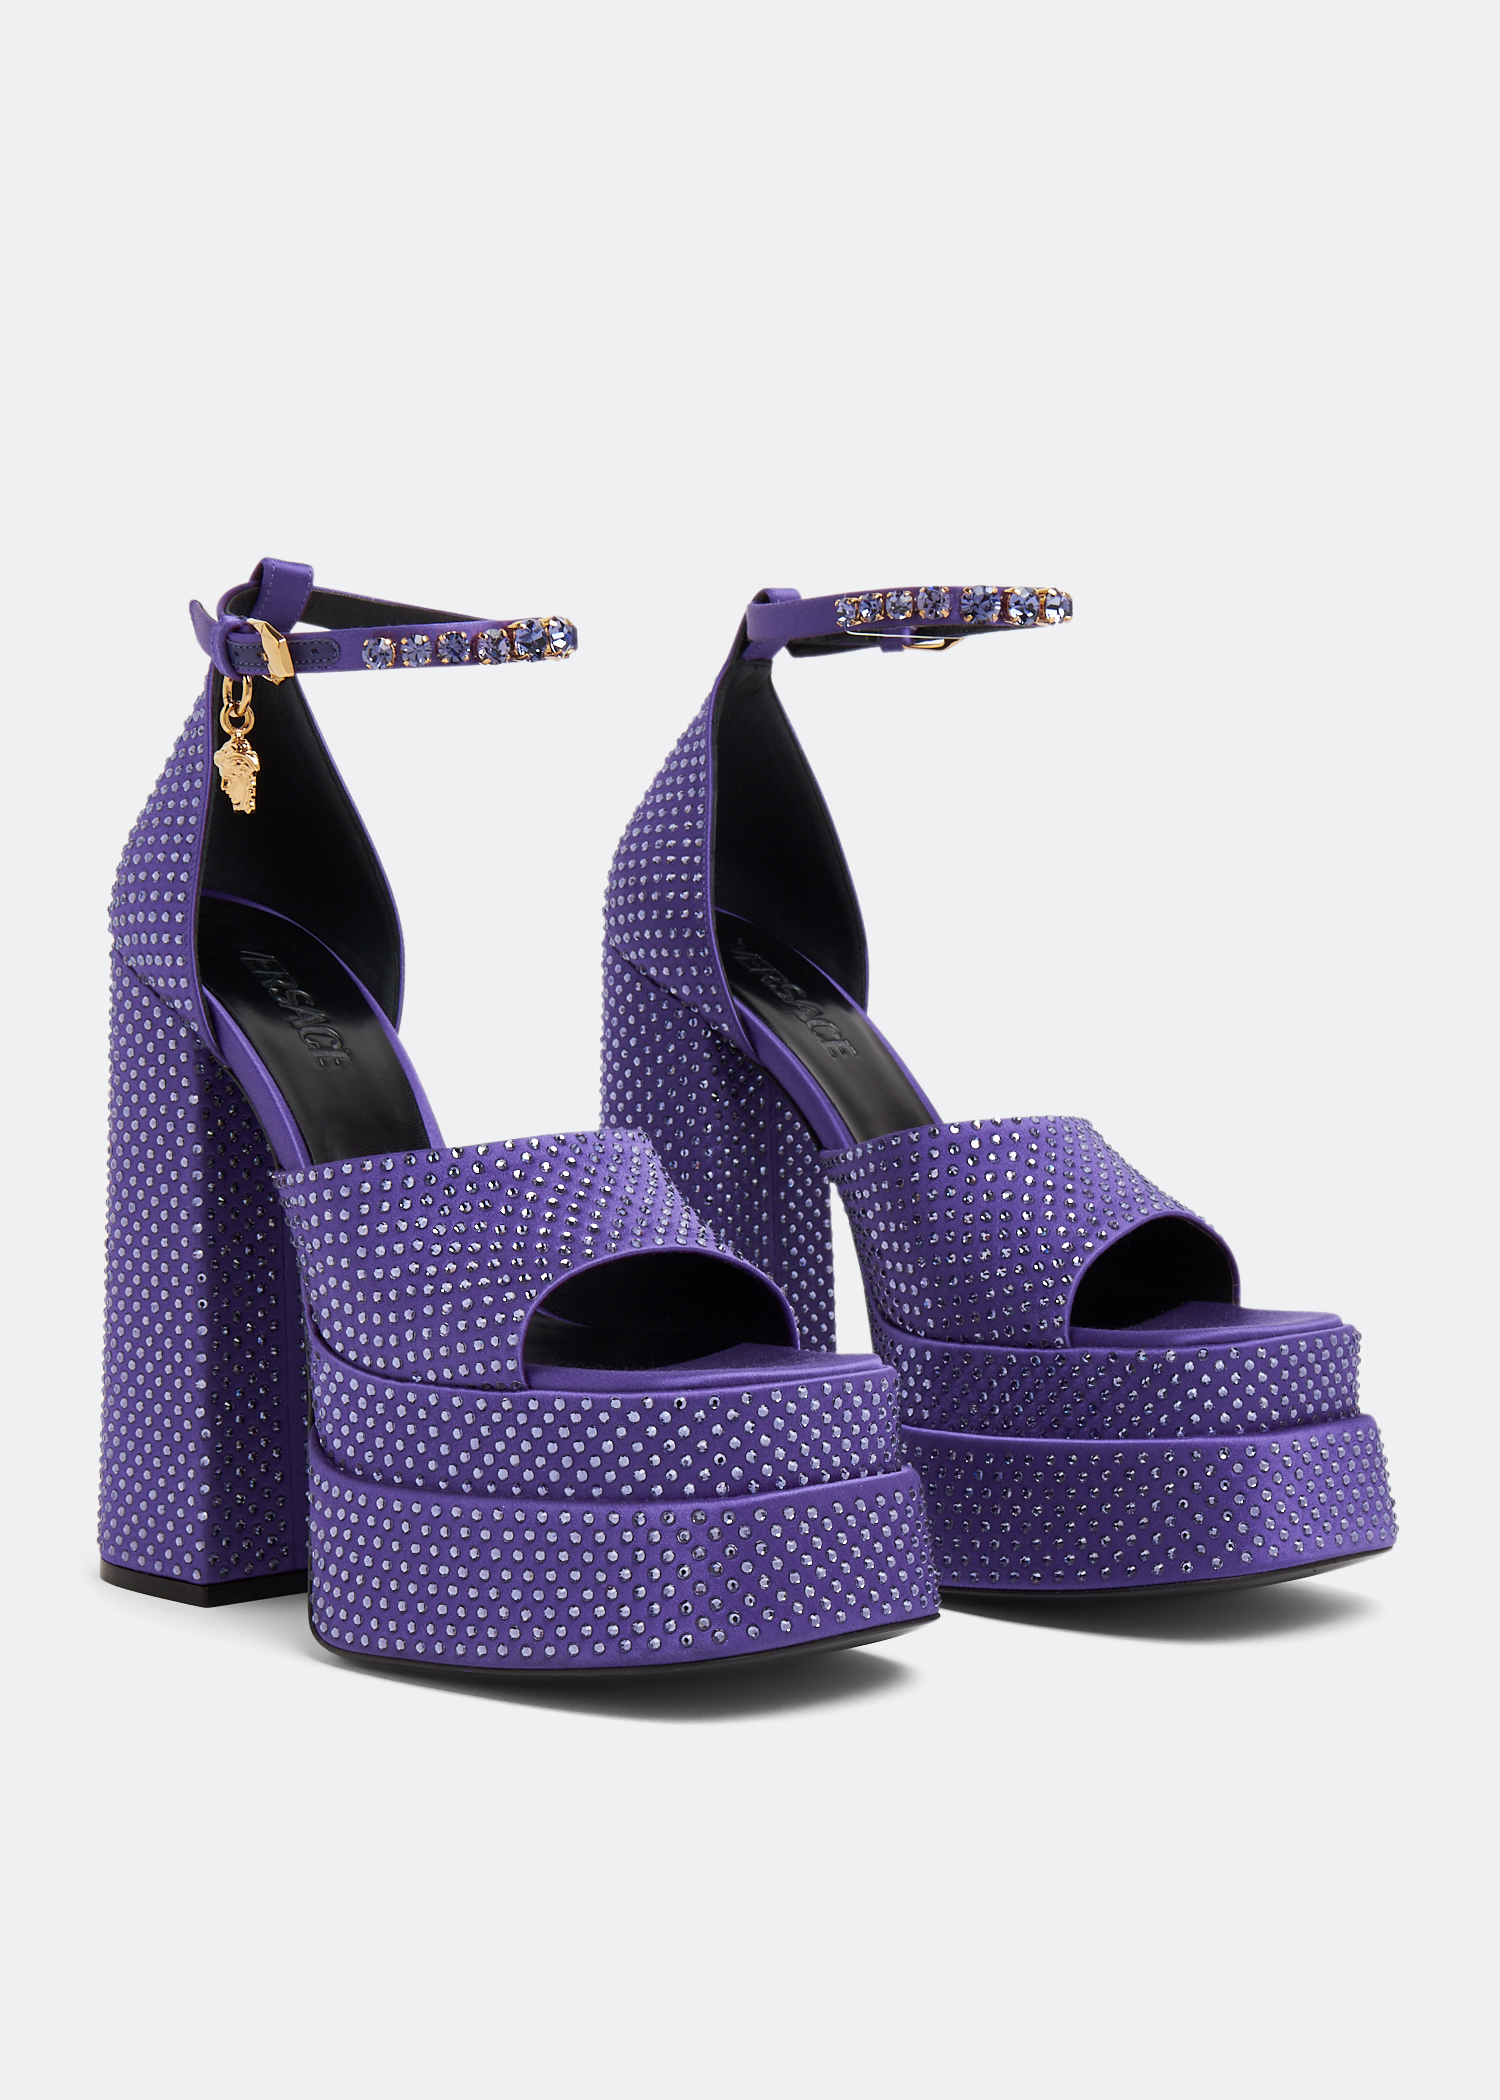 Versace Aevitas platform sandals for Women - Purple in UAE